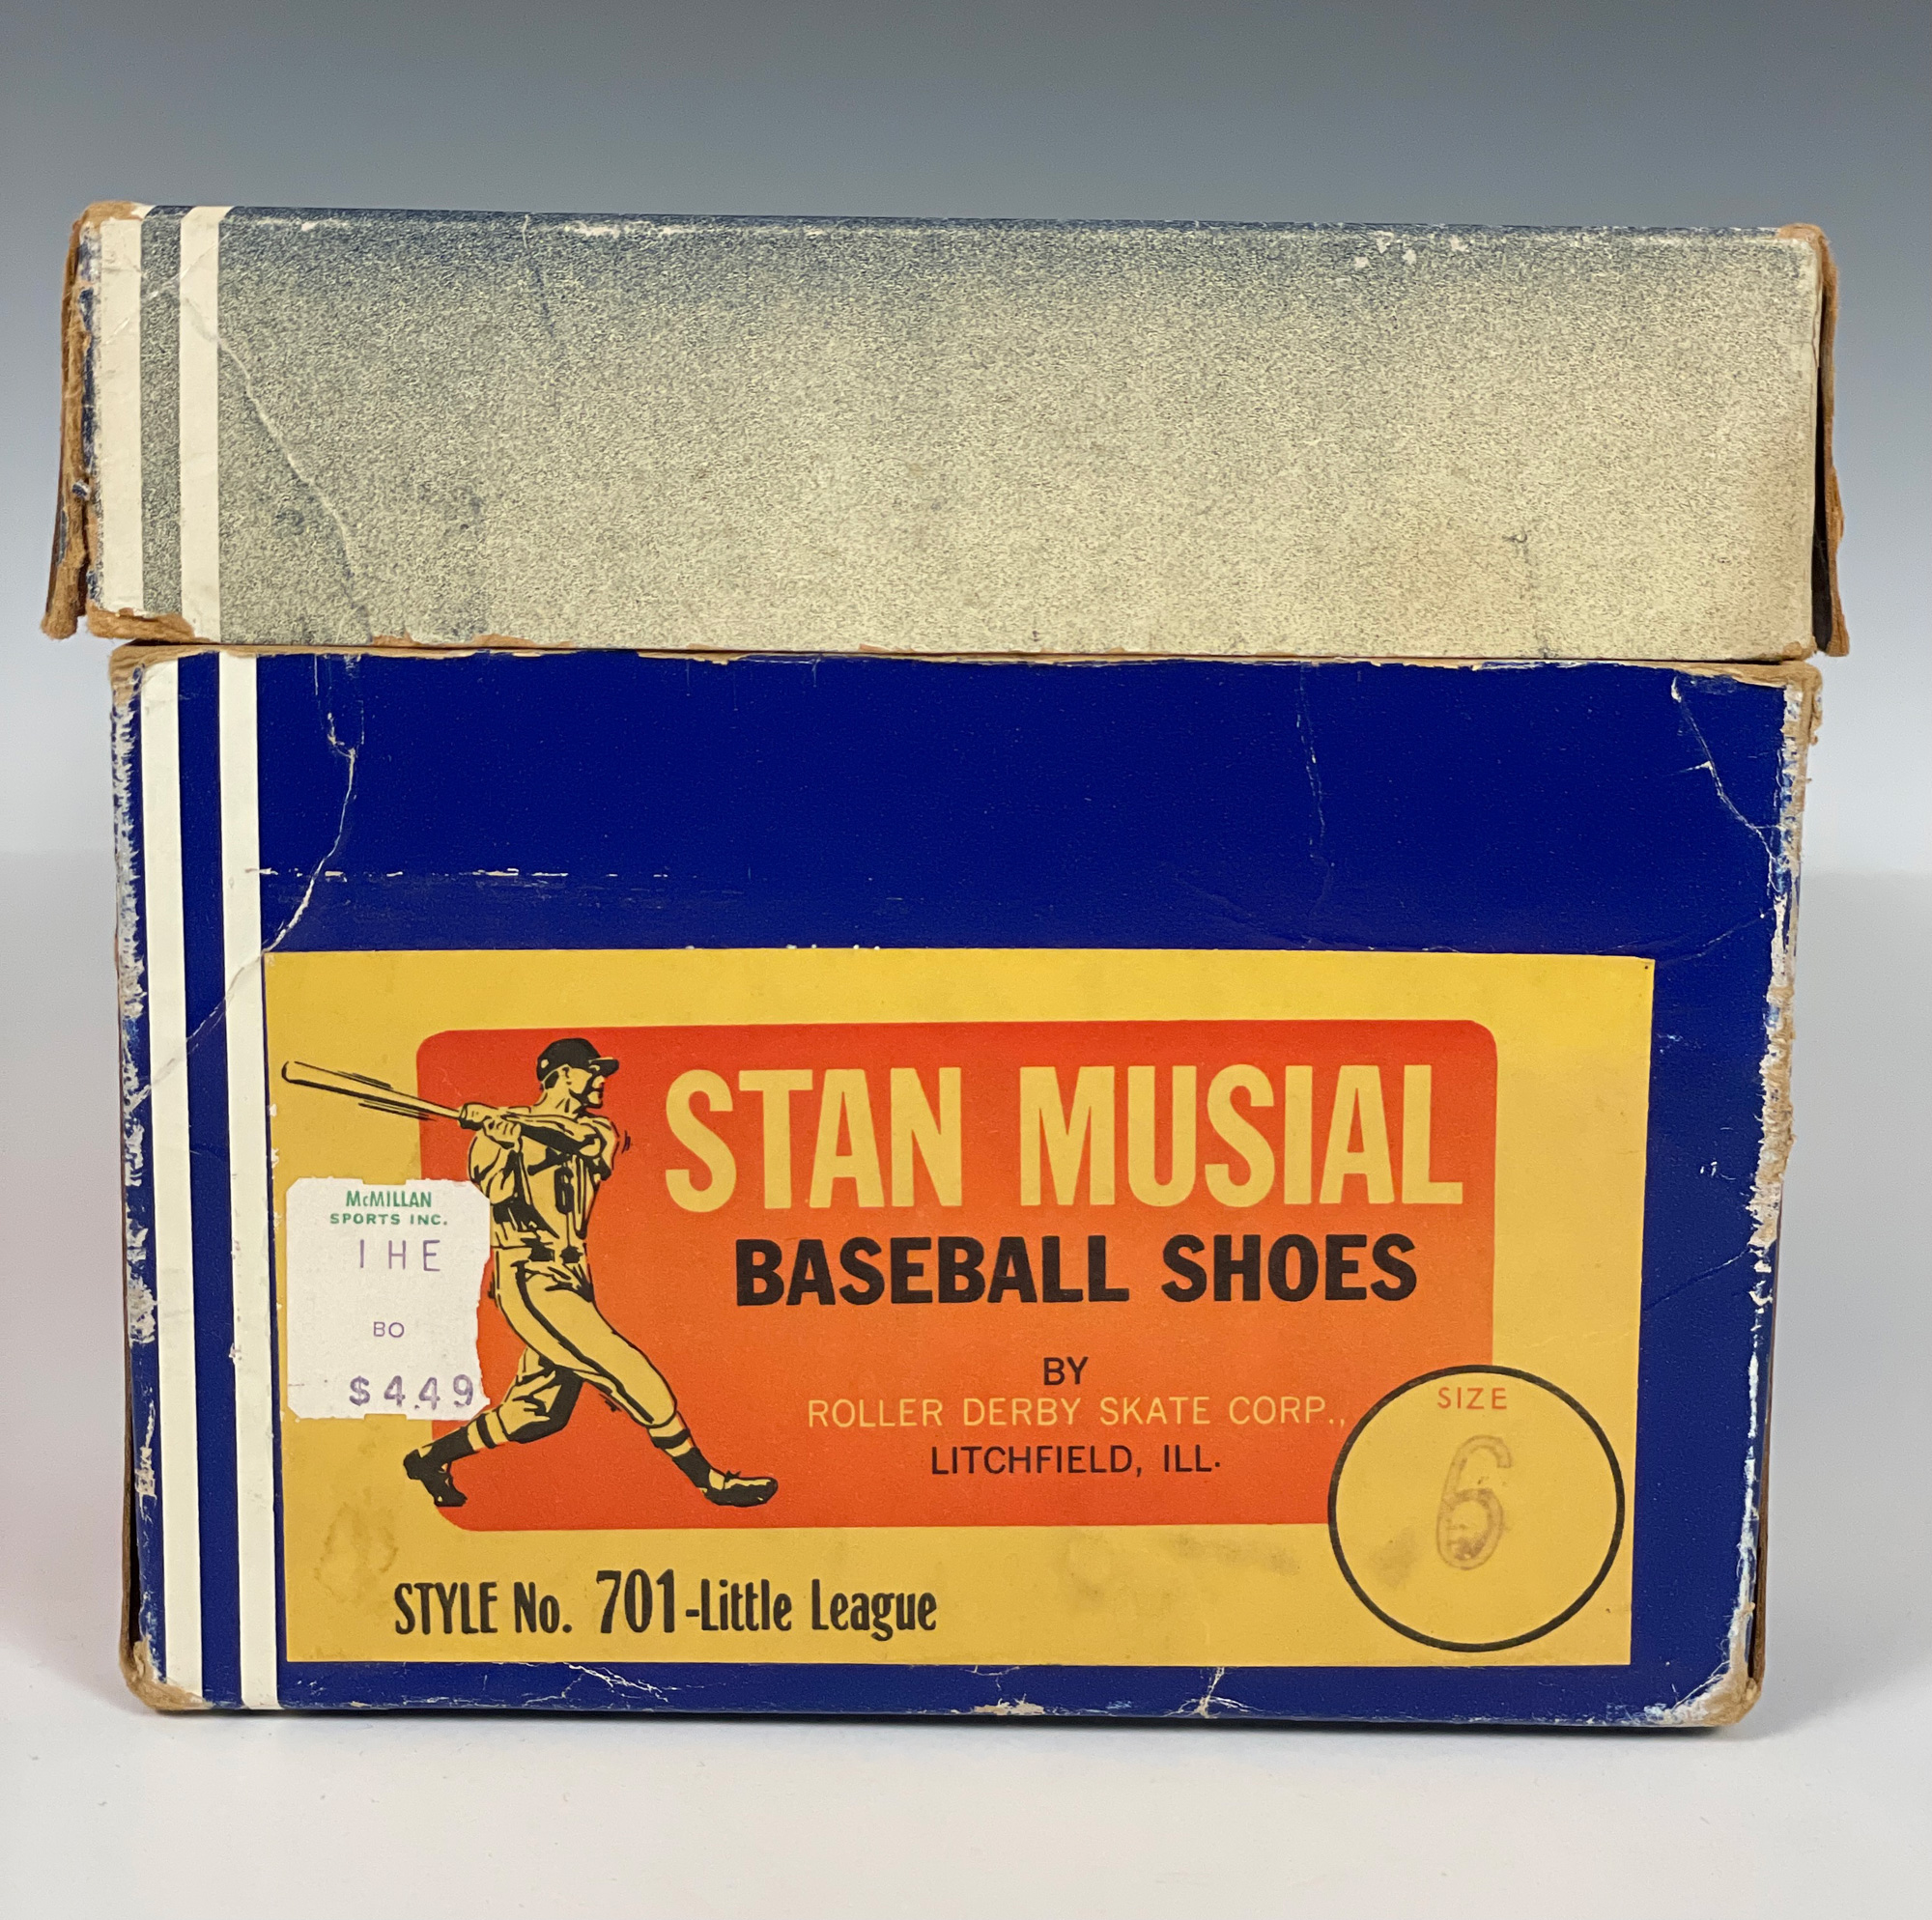 Stan Musial Signed Baseball - The Man #6 HOF MVP Batting Titles